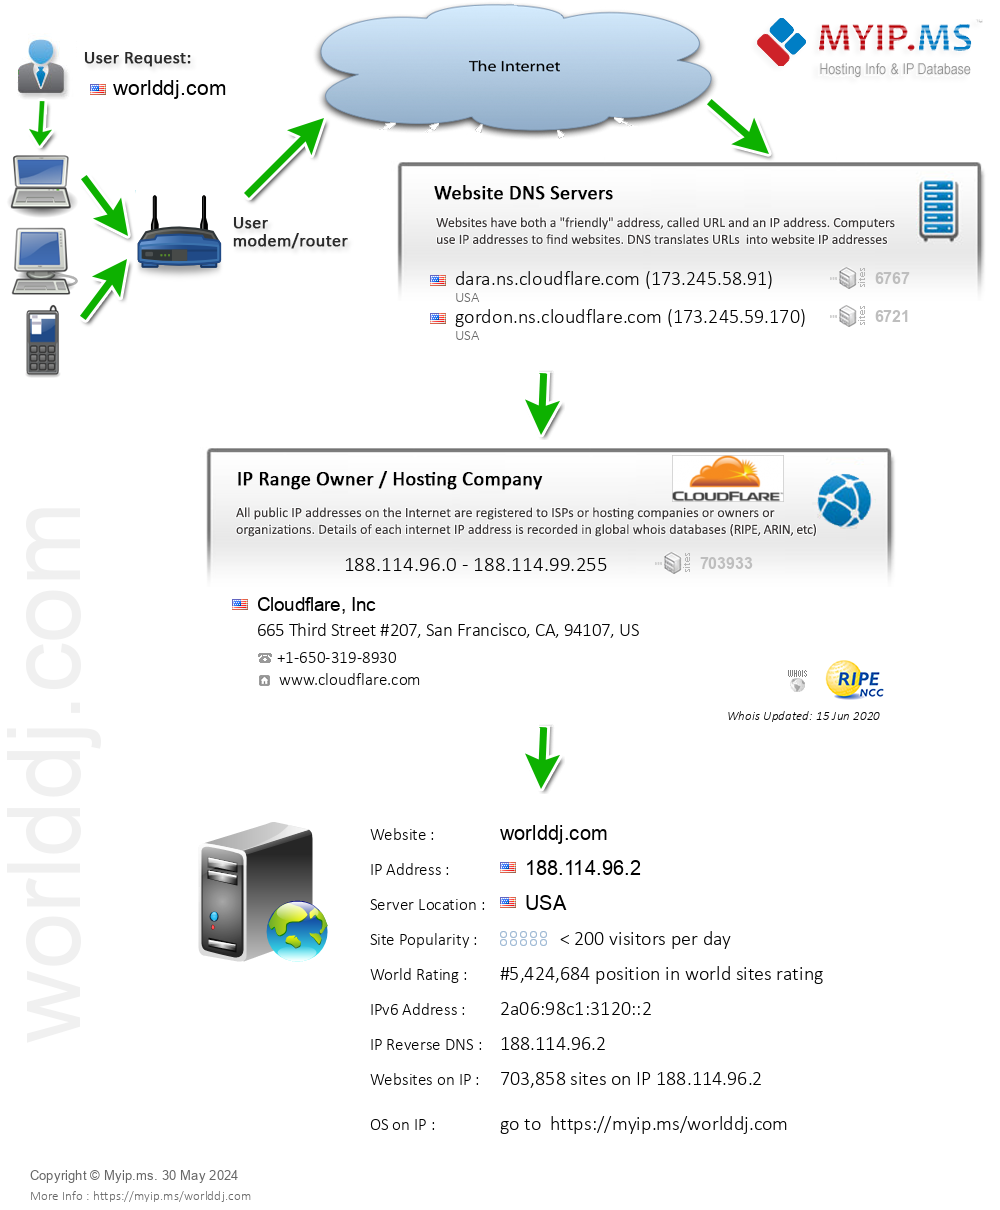 Worlddj.com - Website Hosting Visual IP Diagram